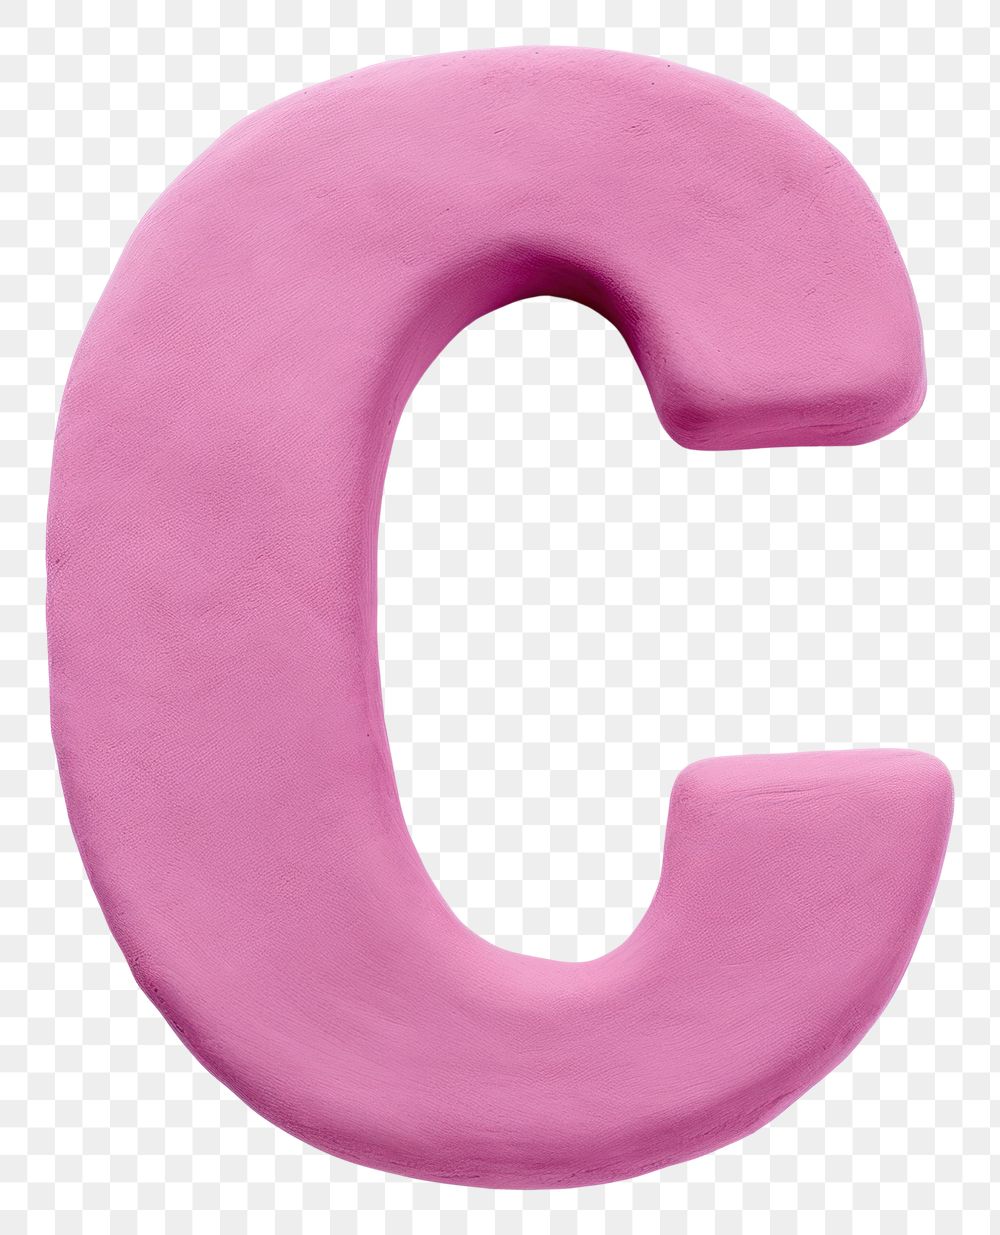 PNG Plasticine letter c number text pink.